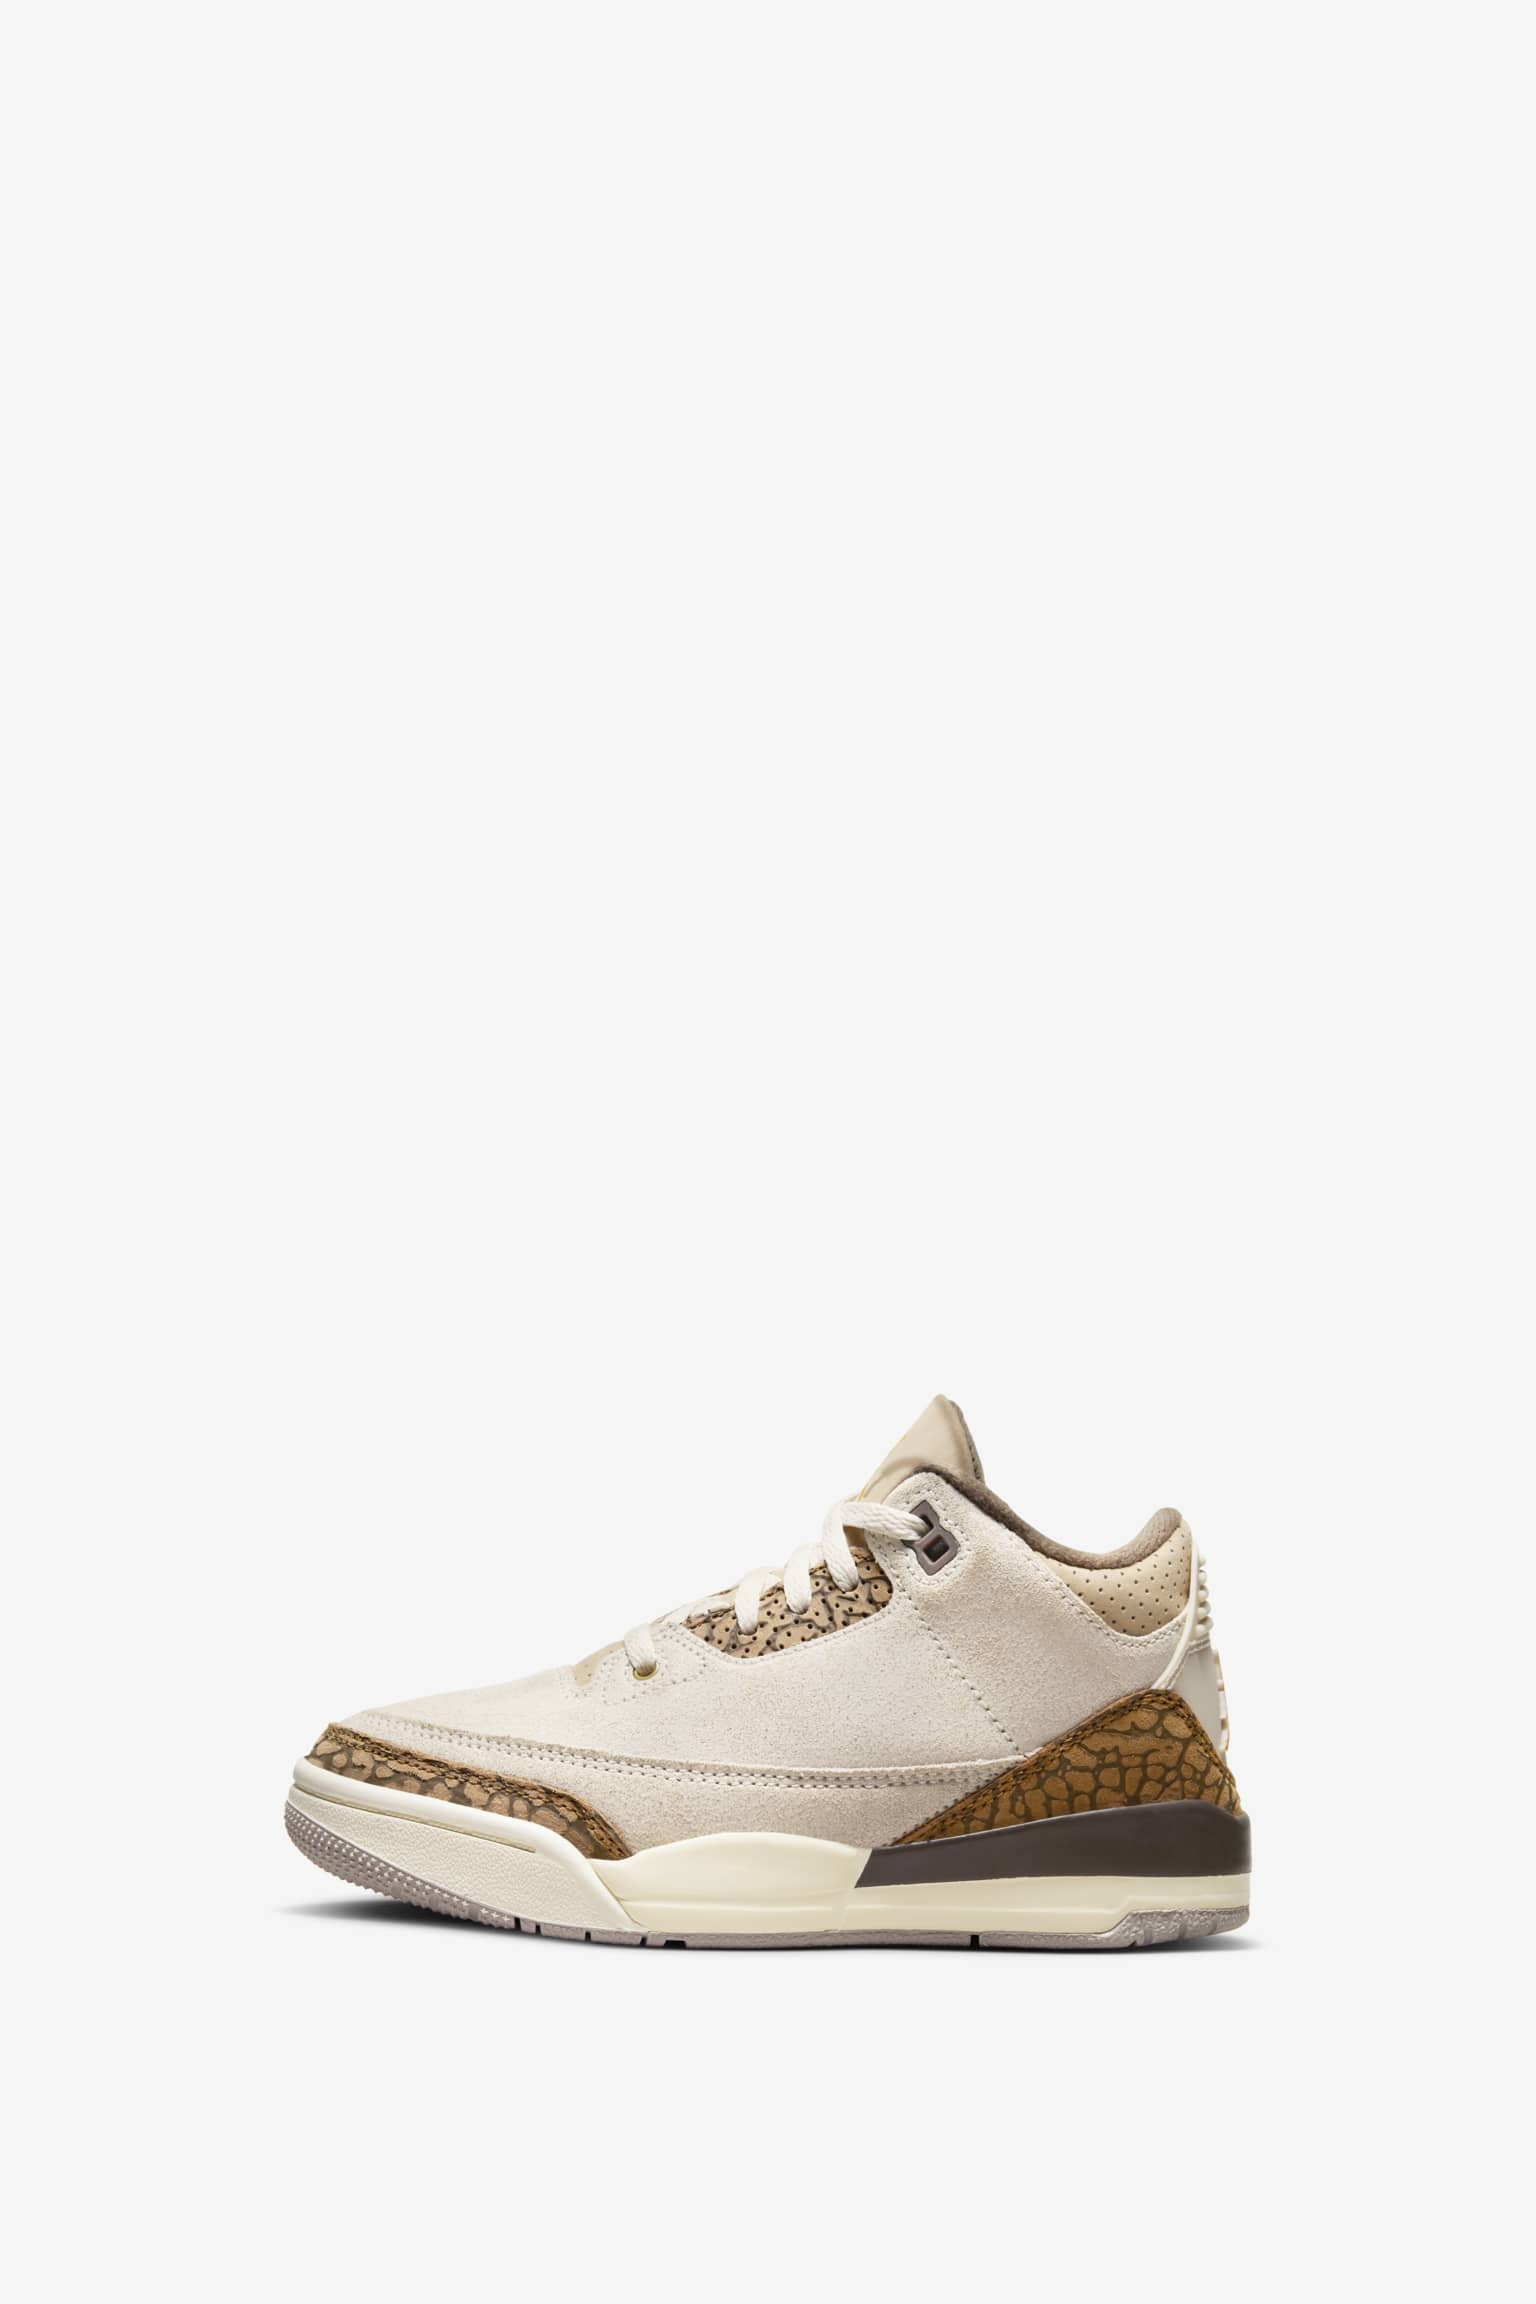 Air Jordan 3 'Orewood Brown' (CT8532-102) Release Date. Nike SNKRS PH